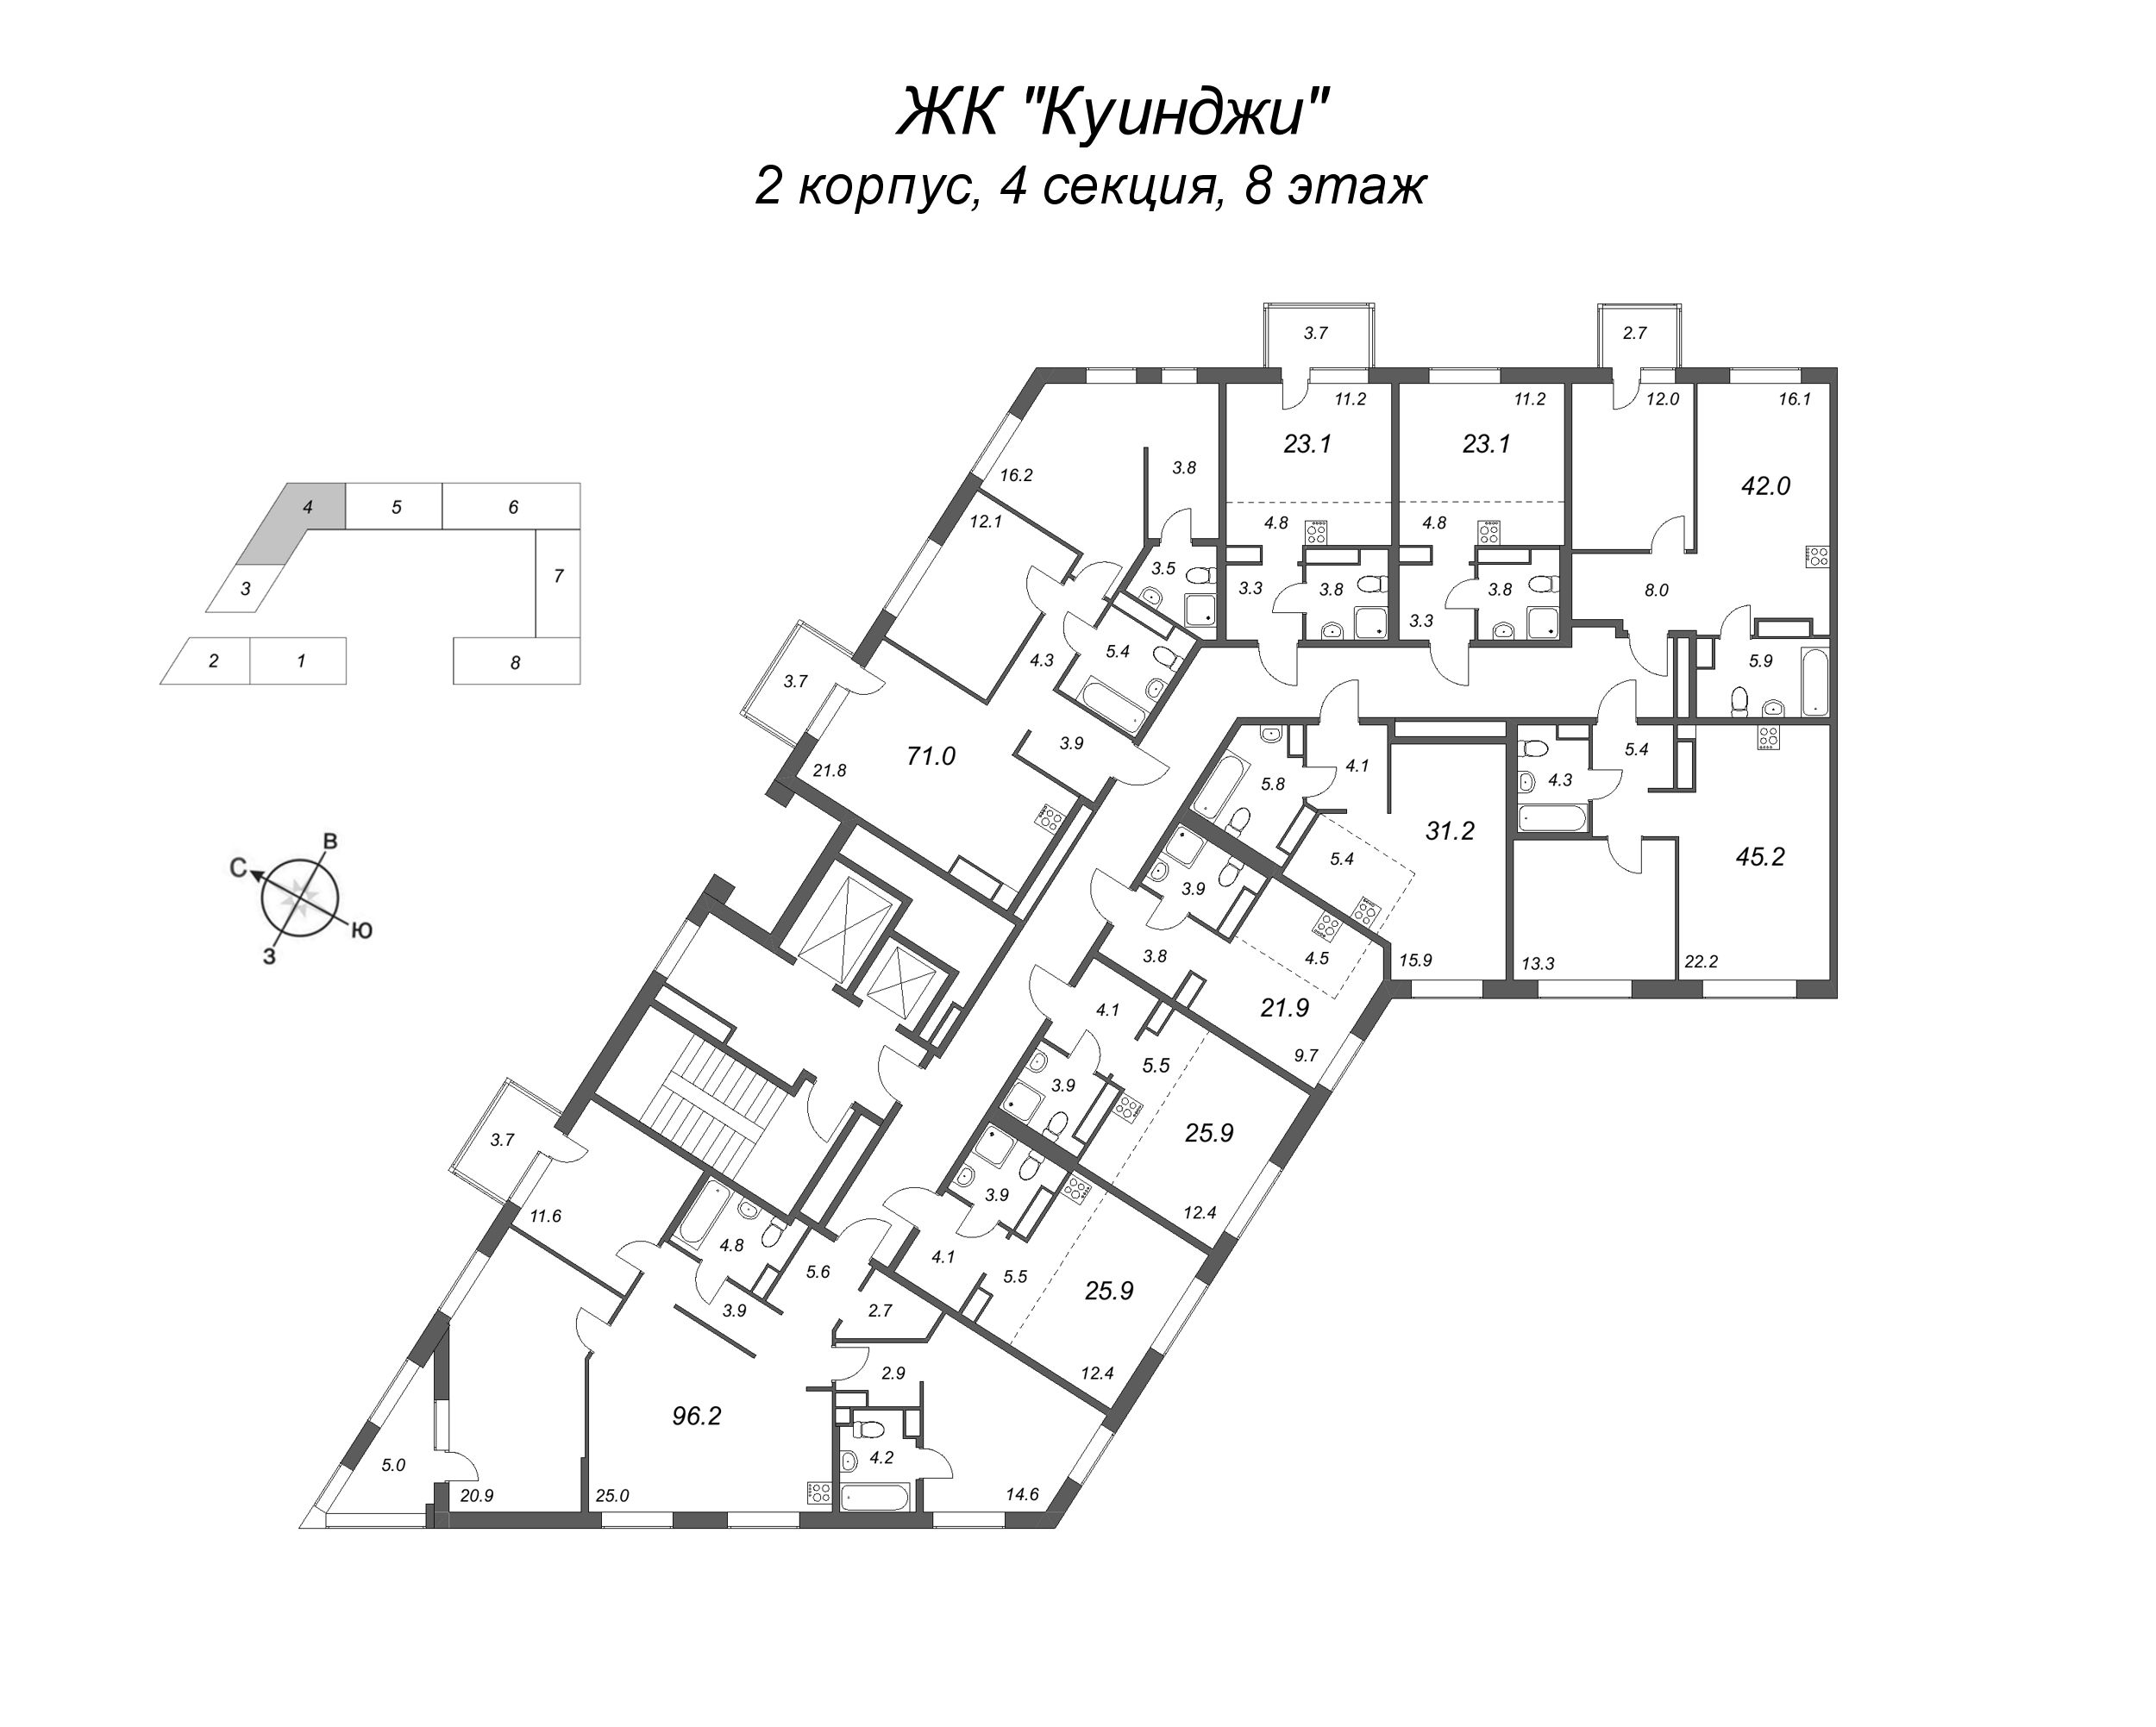 2-комнатная (Евро) квартира, 45.2 м² - планировка этажа